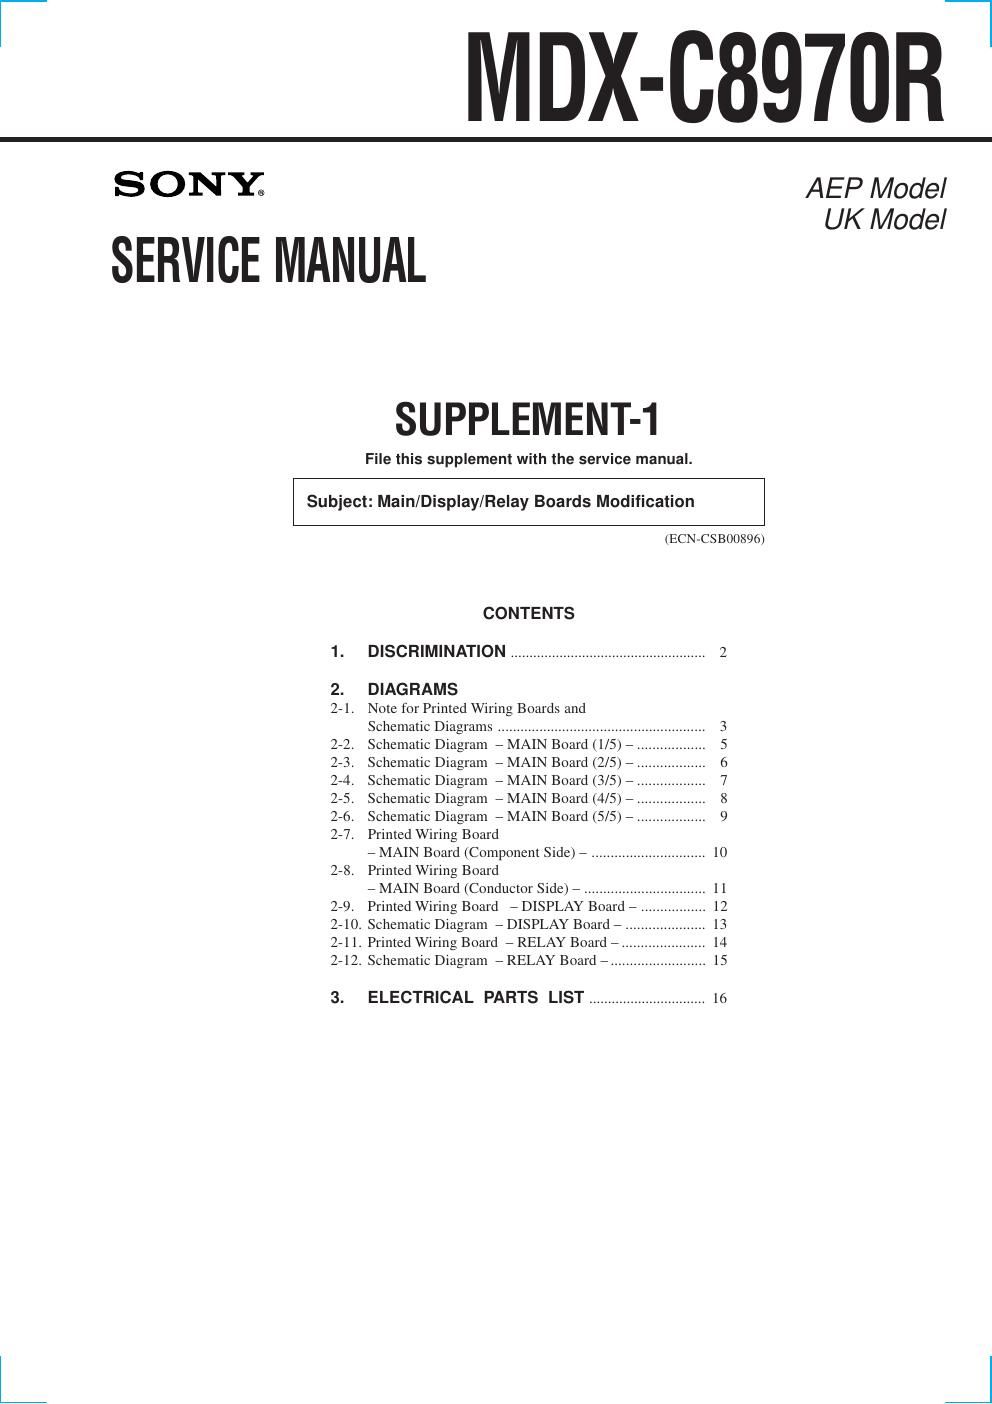 sony mdx c 8970r service manual